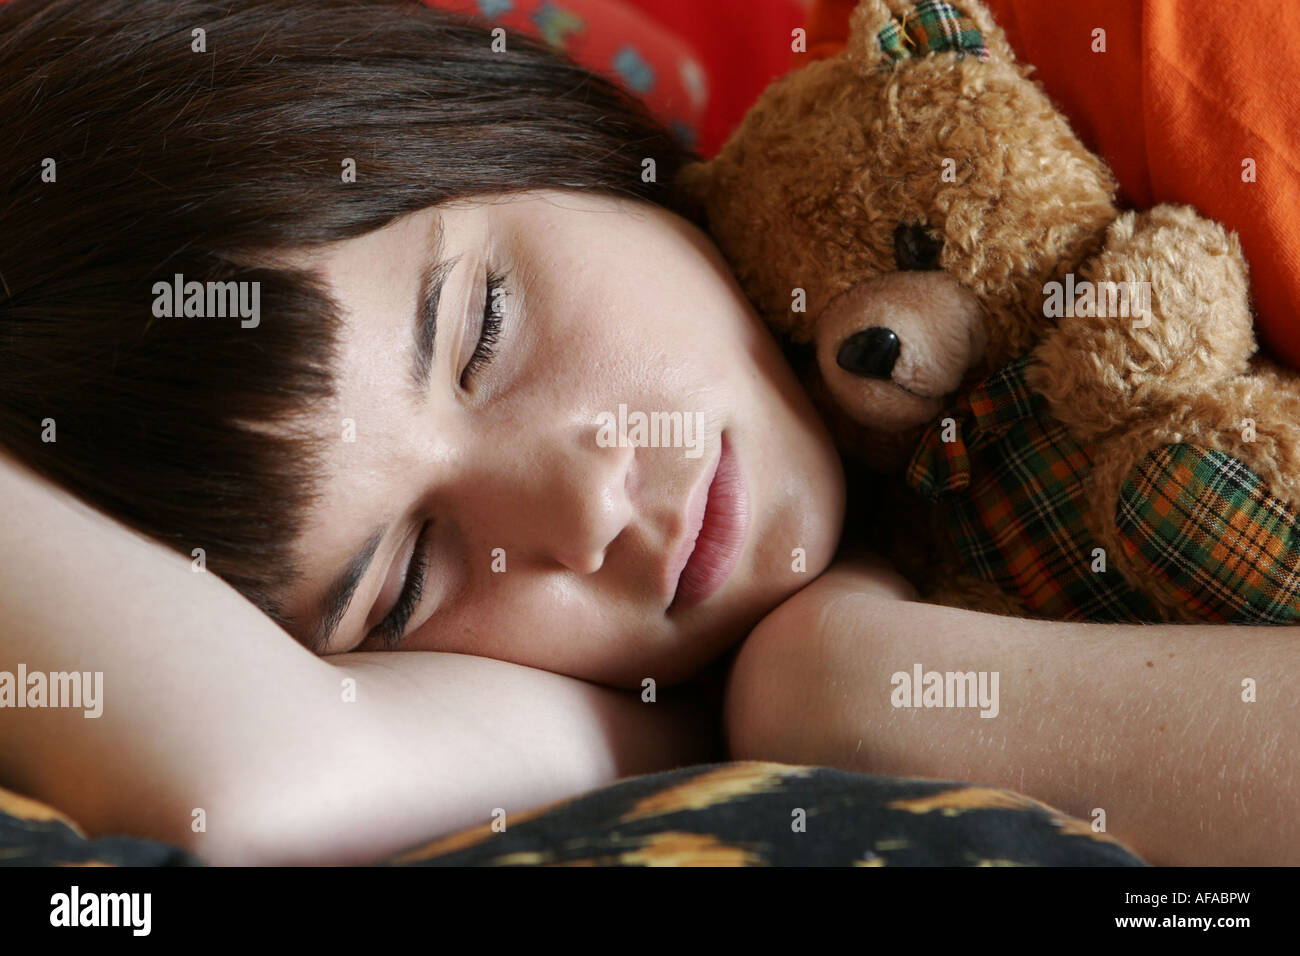 Teenager girl sleeping with teddy bear Stock Photo